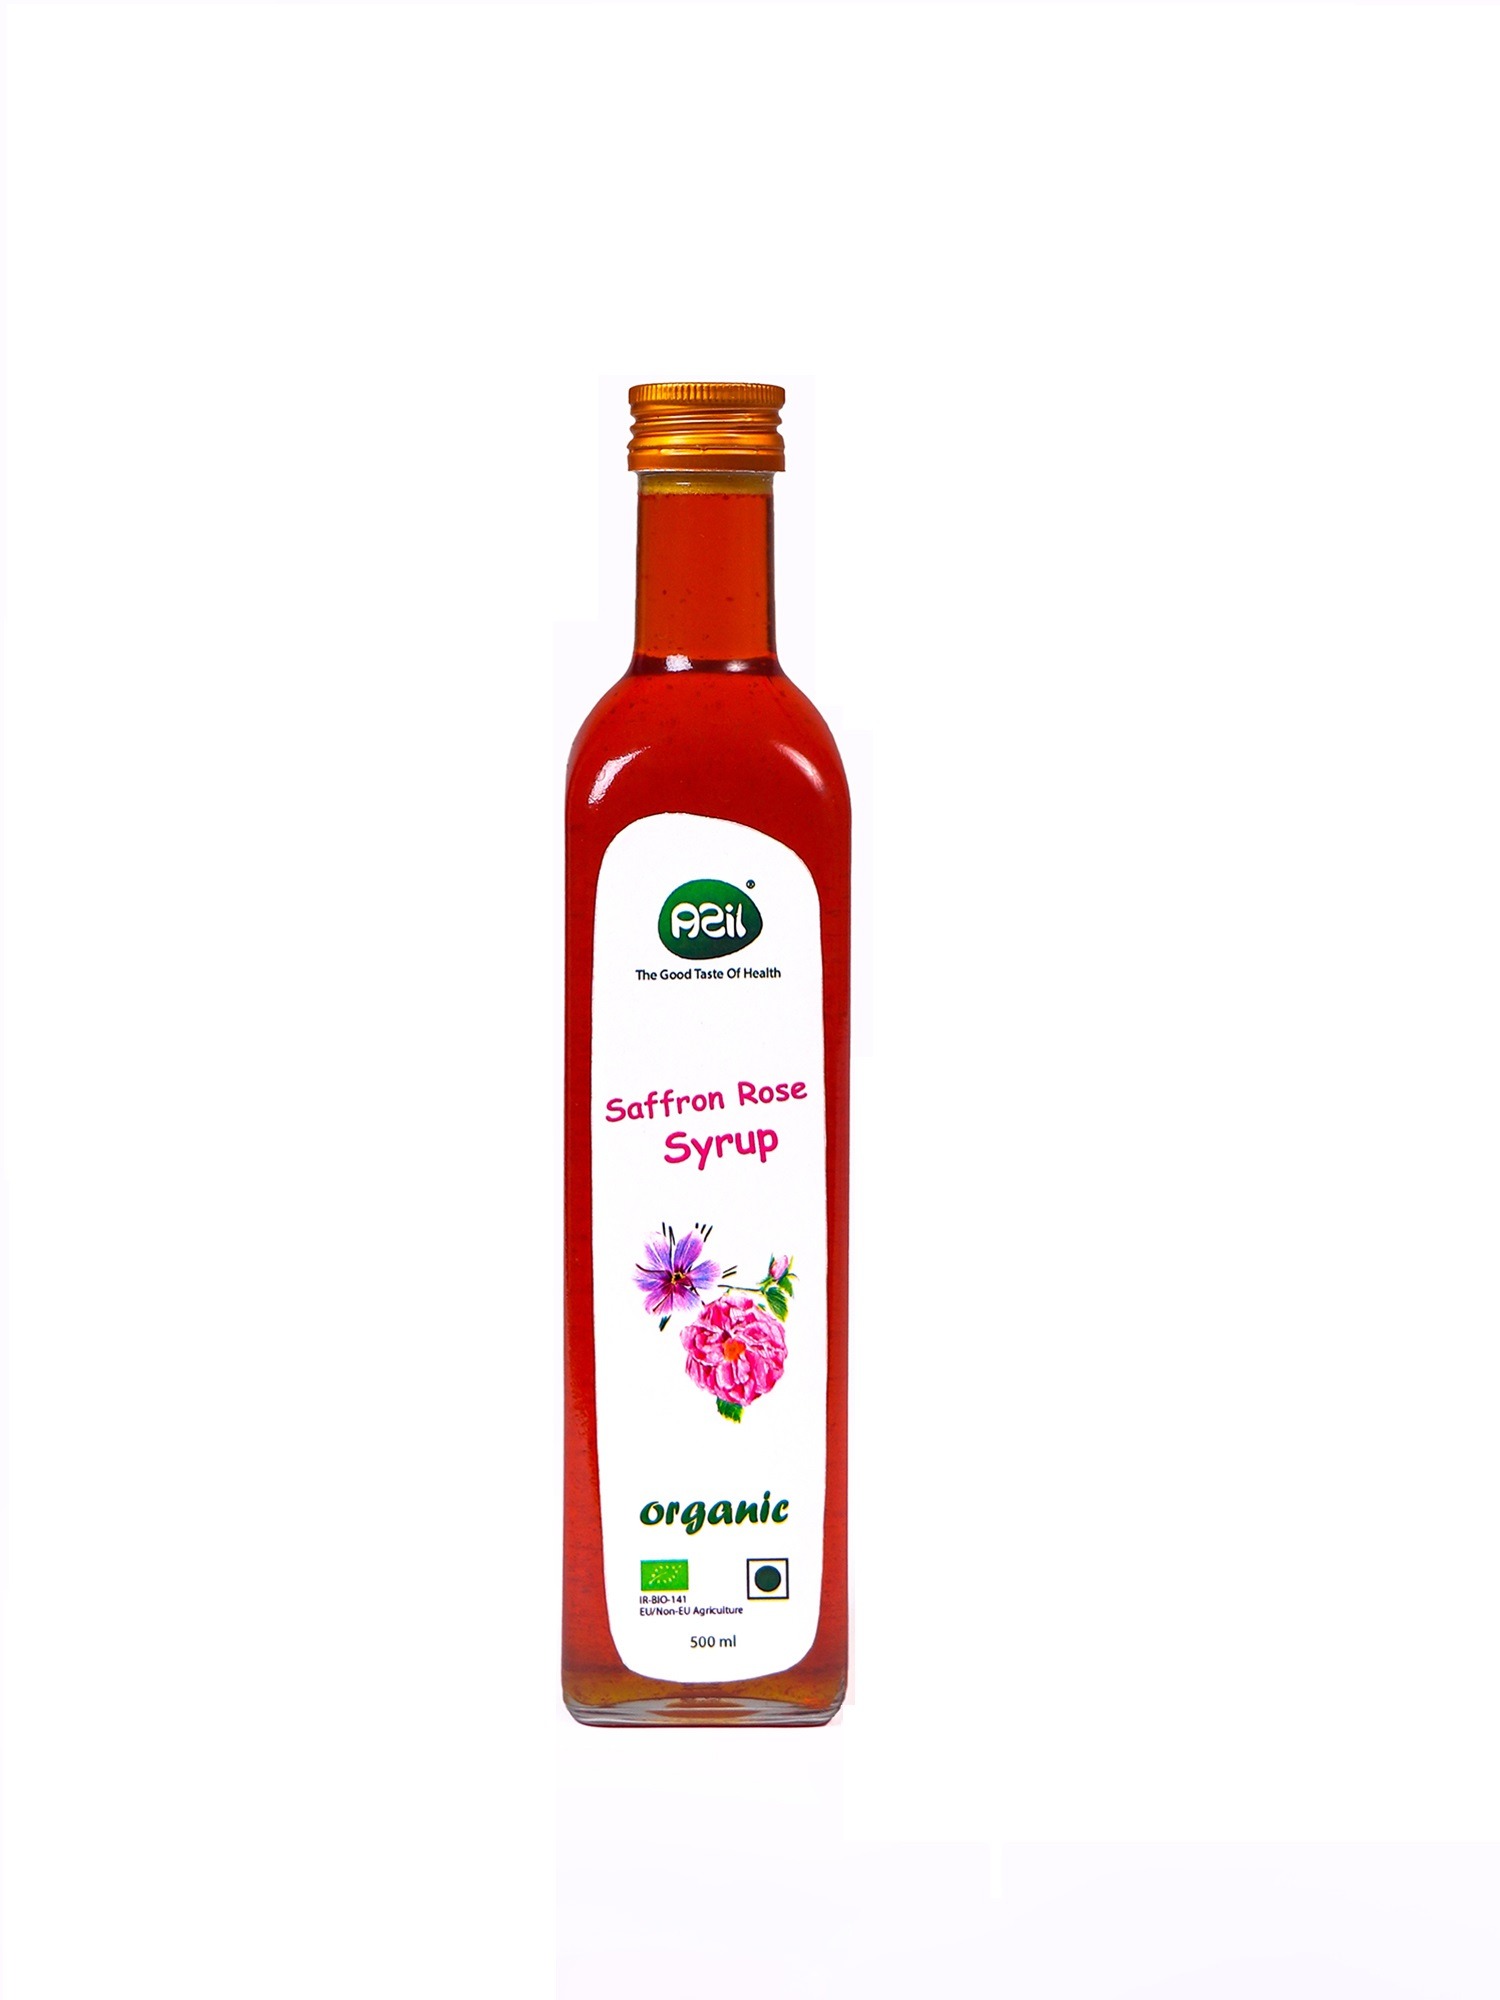 Saffron rose water  - Azil Organic Saffron-Rosewater Syrup